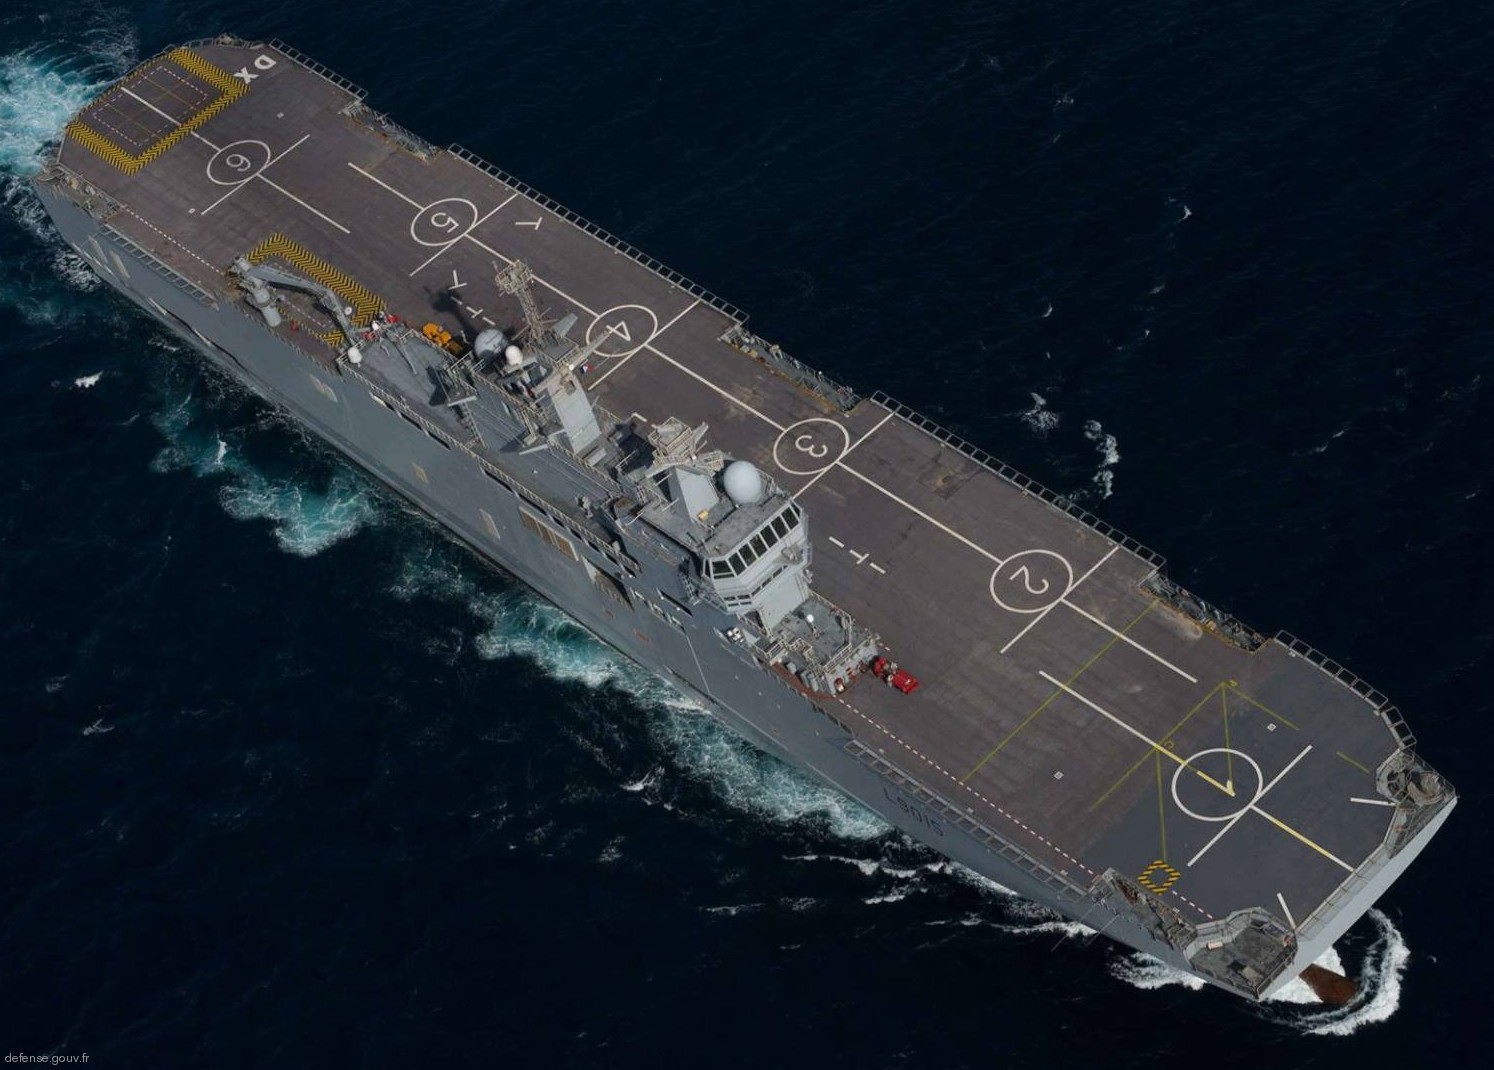 l-9015 fs dixmude mistral class amphibious assault command ship bpc french navy marine nationale 03 flight deck